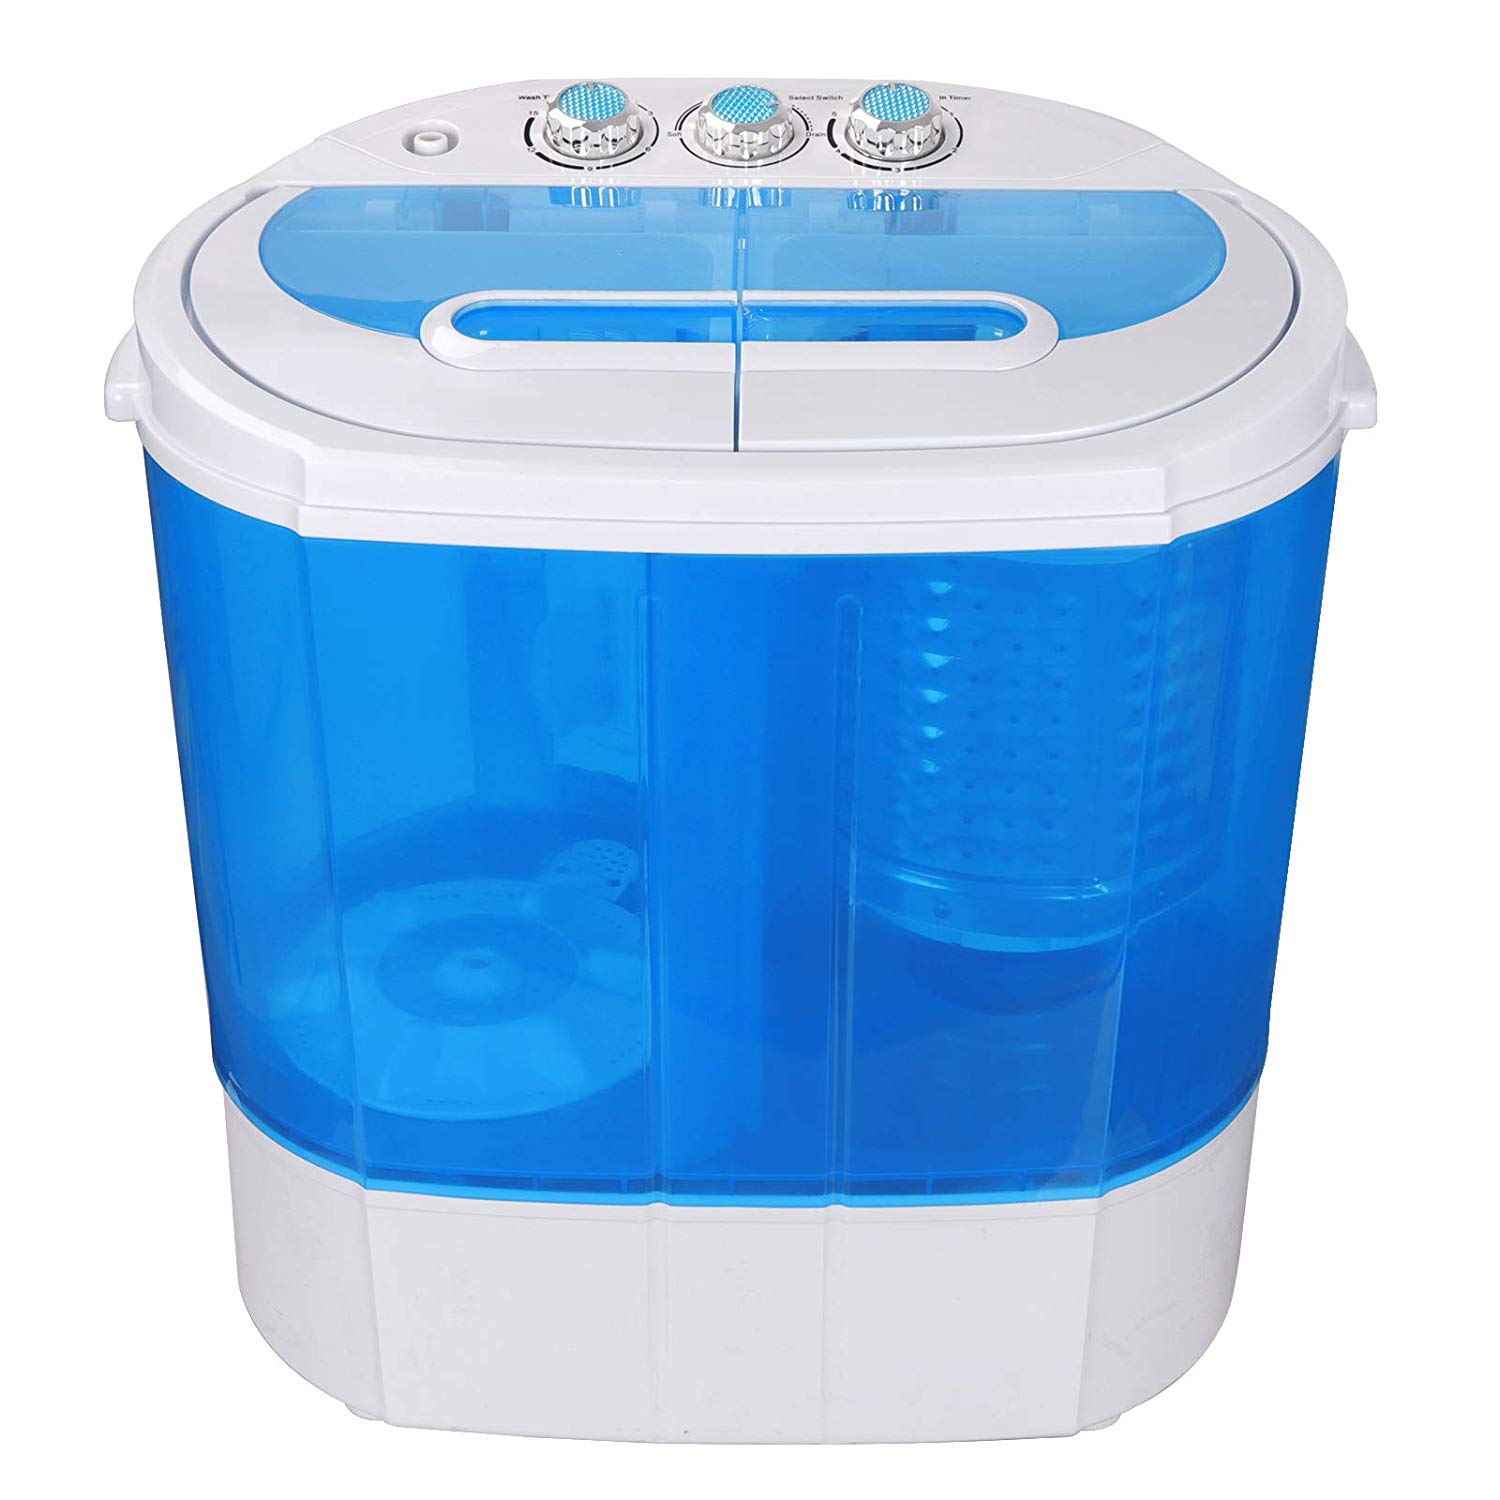 SUPER DEAL Portable Compact Washing Machine, Mini Twin Tub Washing Machine w/Washer&Spinner, Gravity Drain Pump and Drain Hose